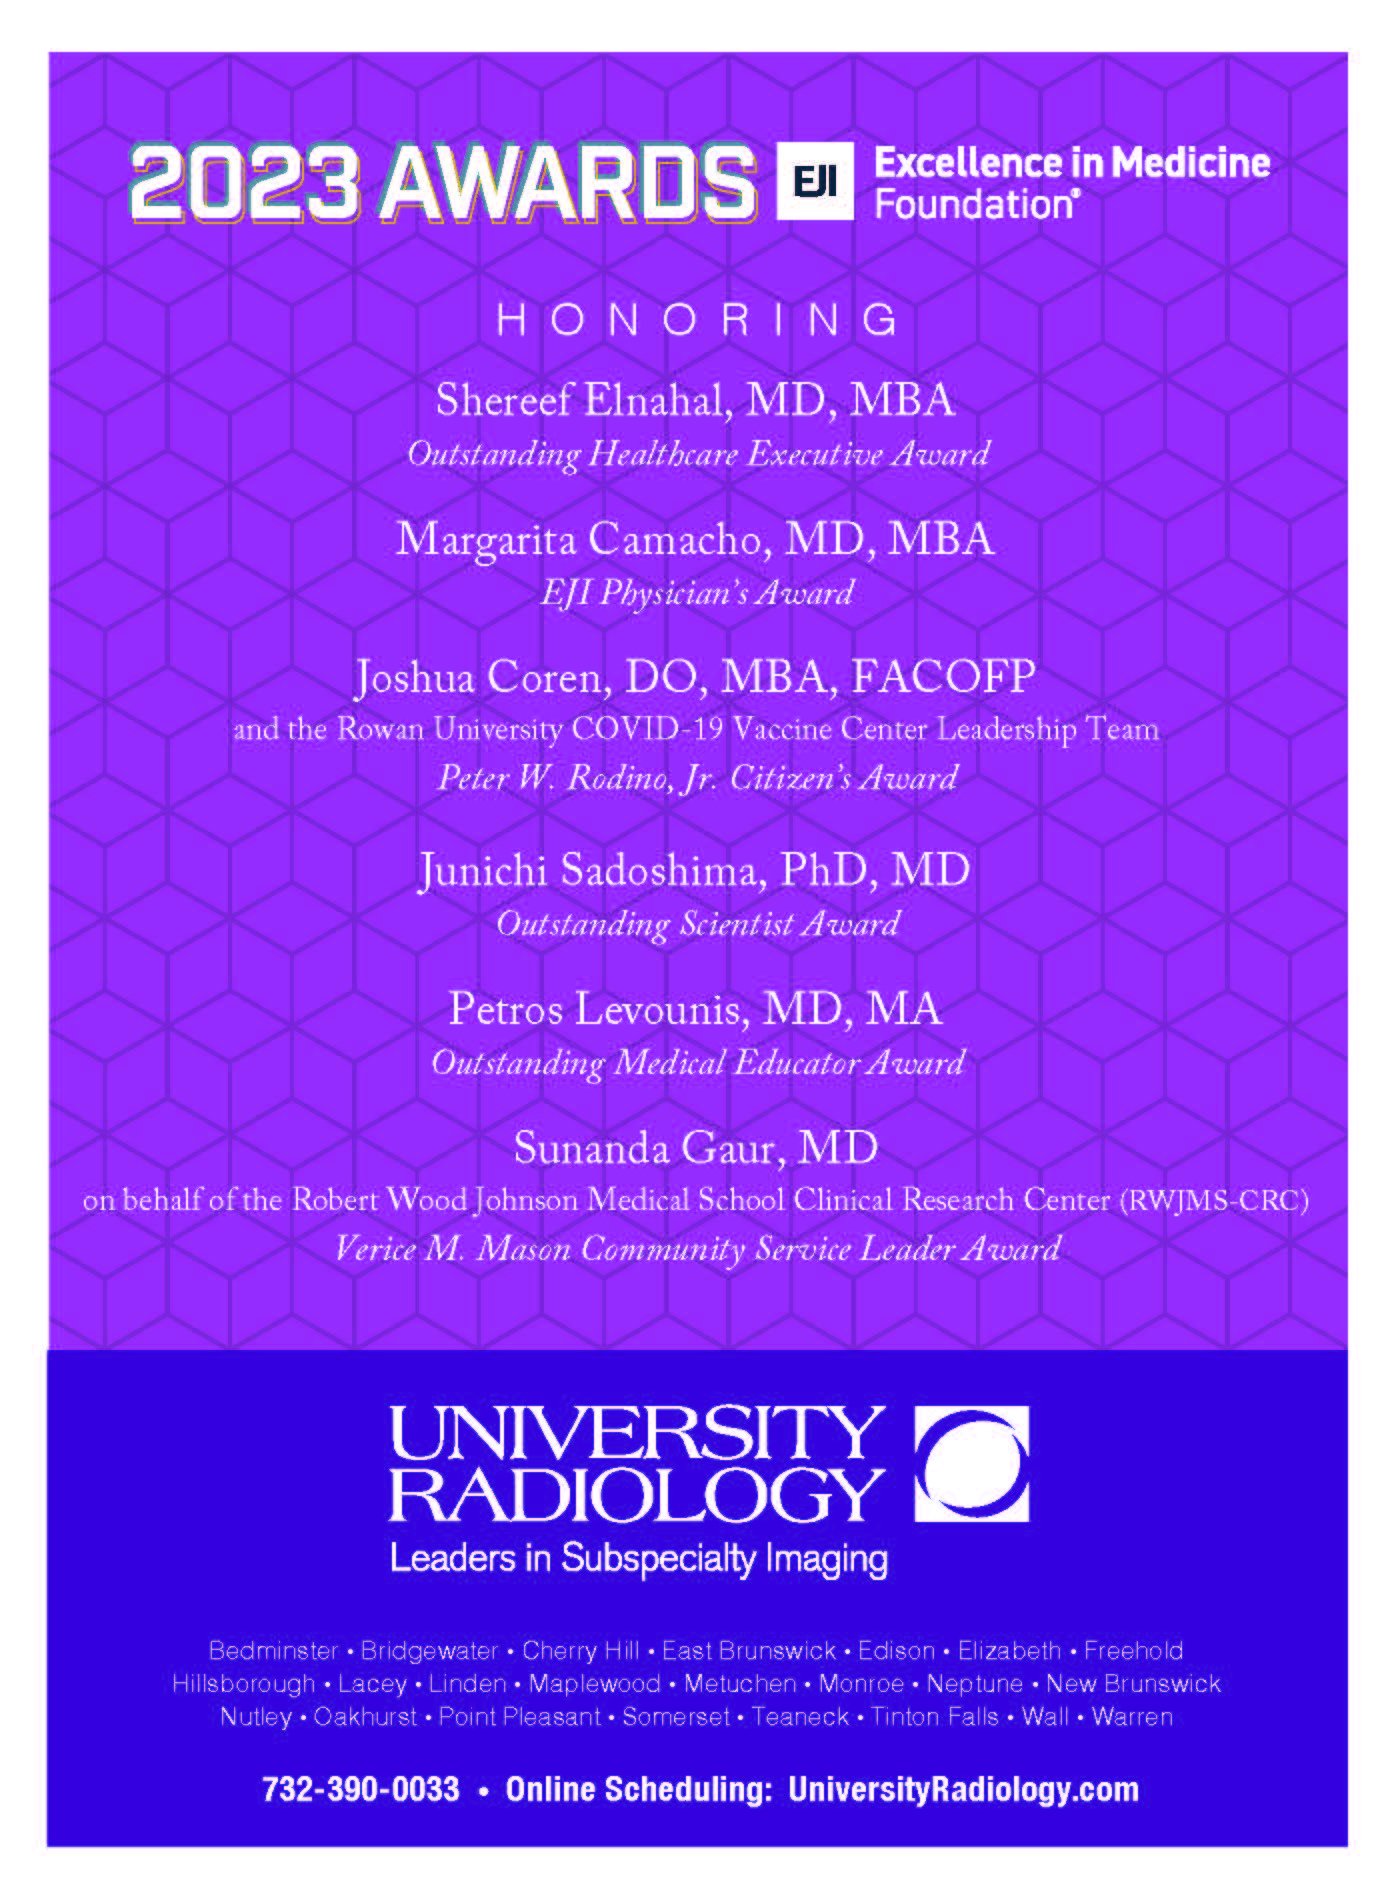 University Radiology Group advertisement